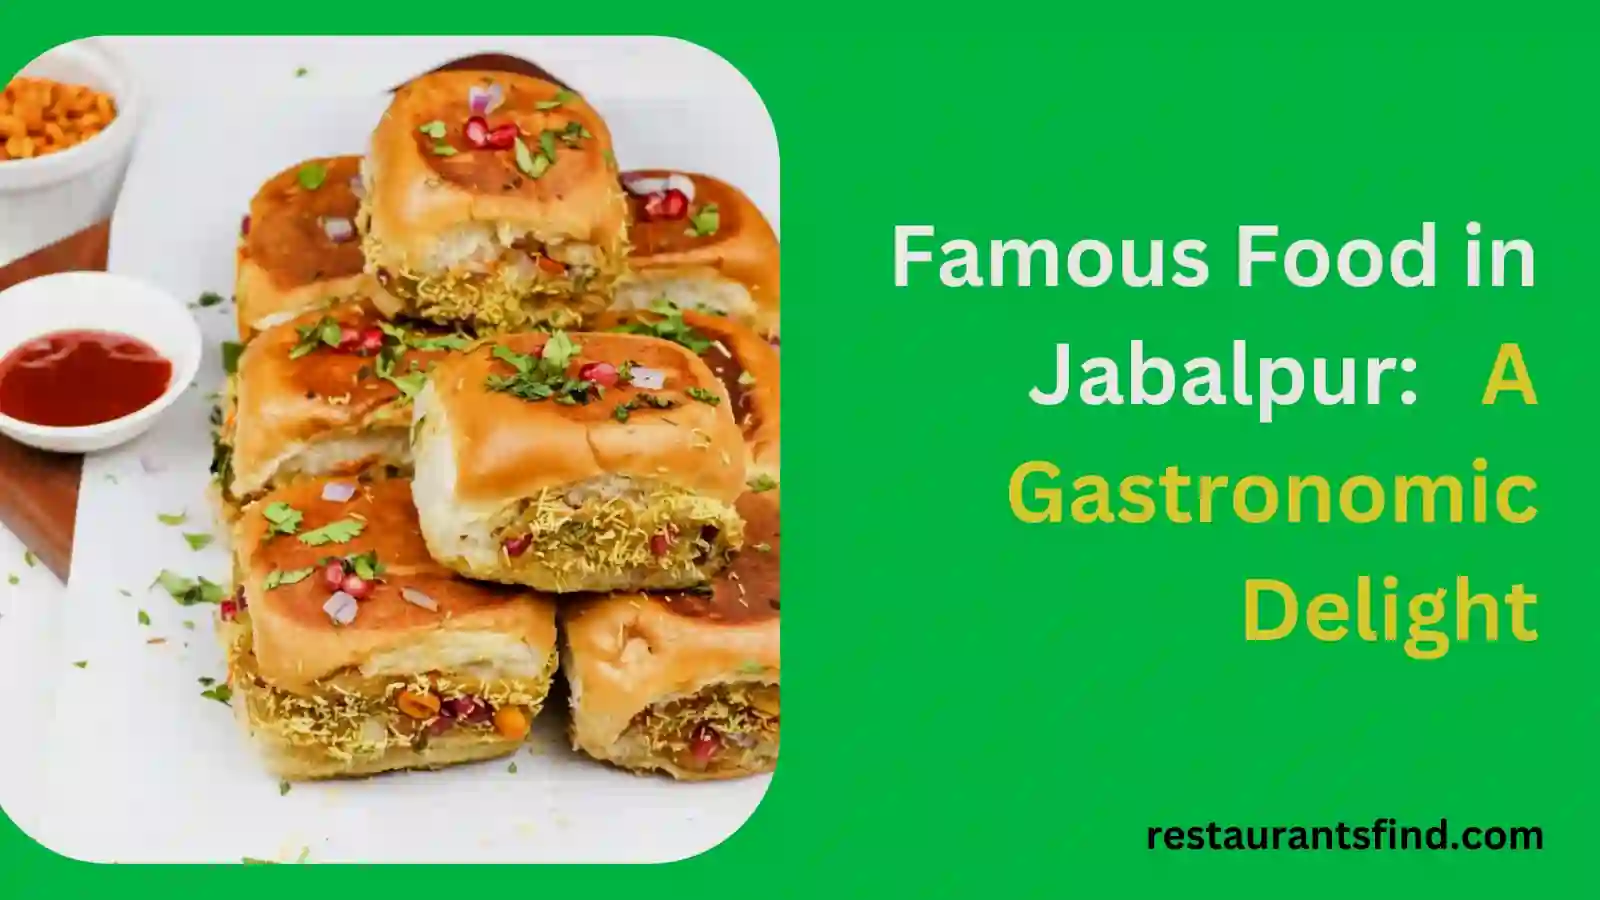 Famous Food in Jabalpur: A Gastronomic Delight